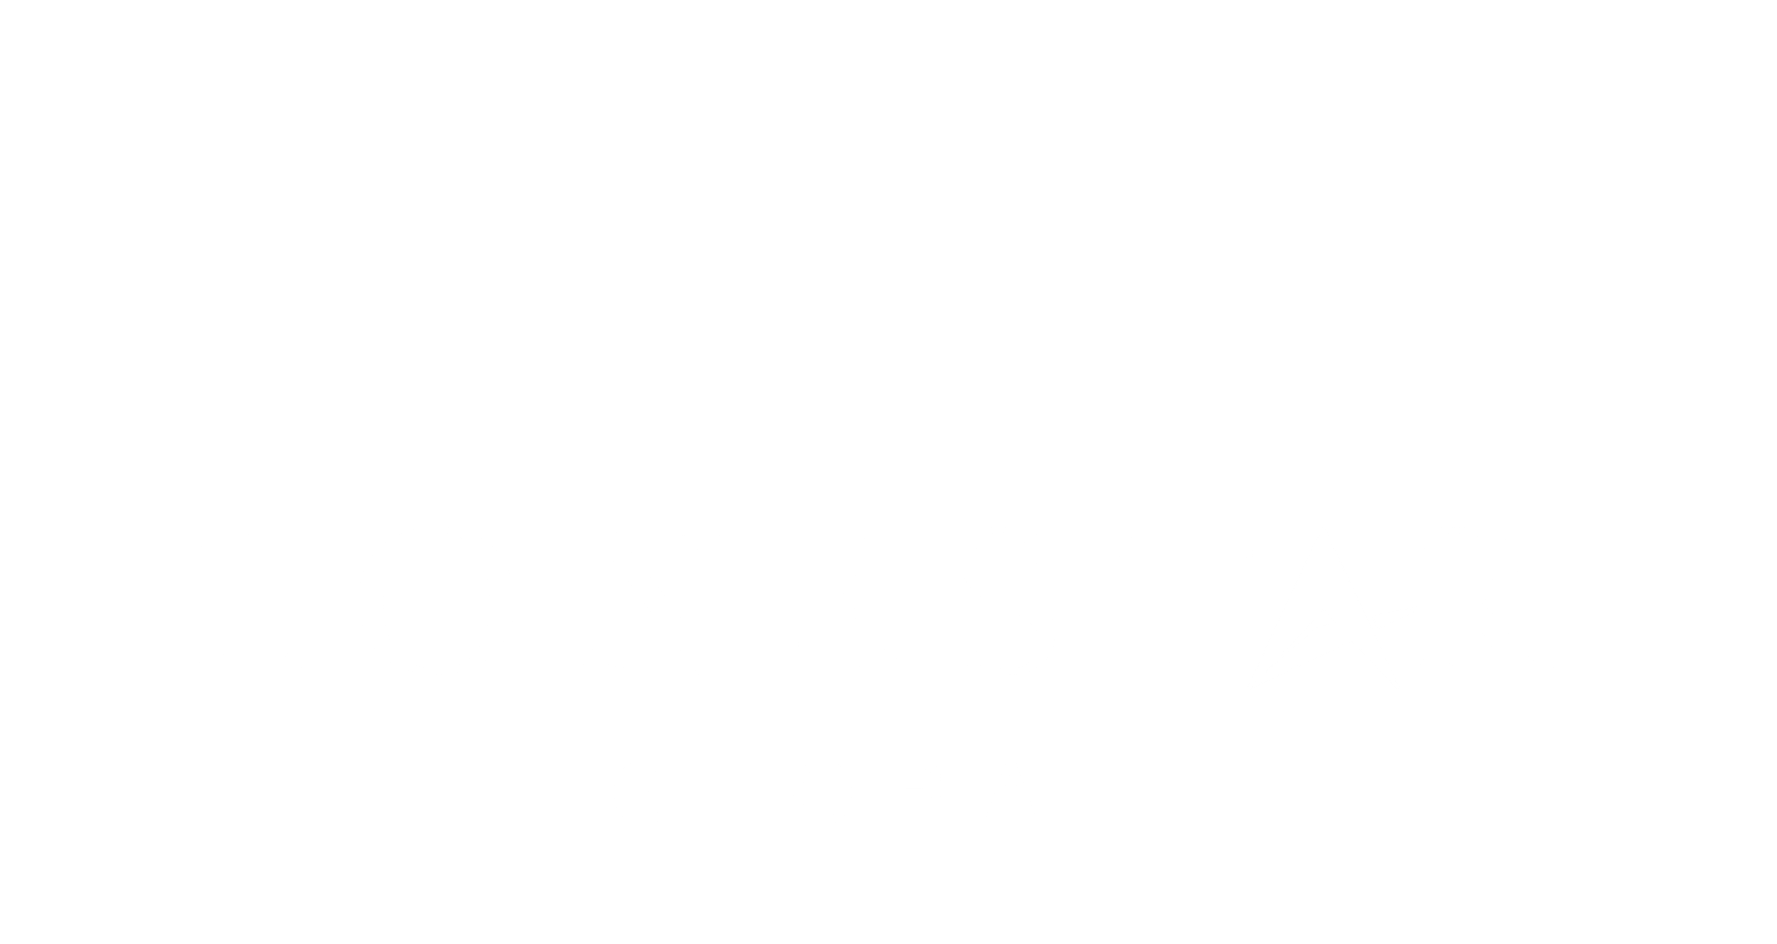 Lone Star Global Ltd